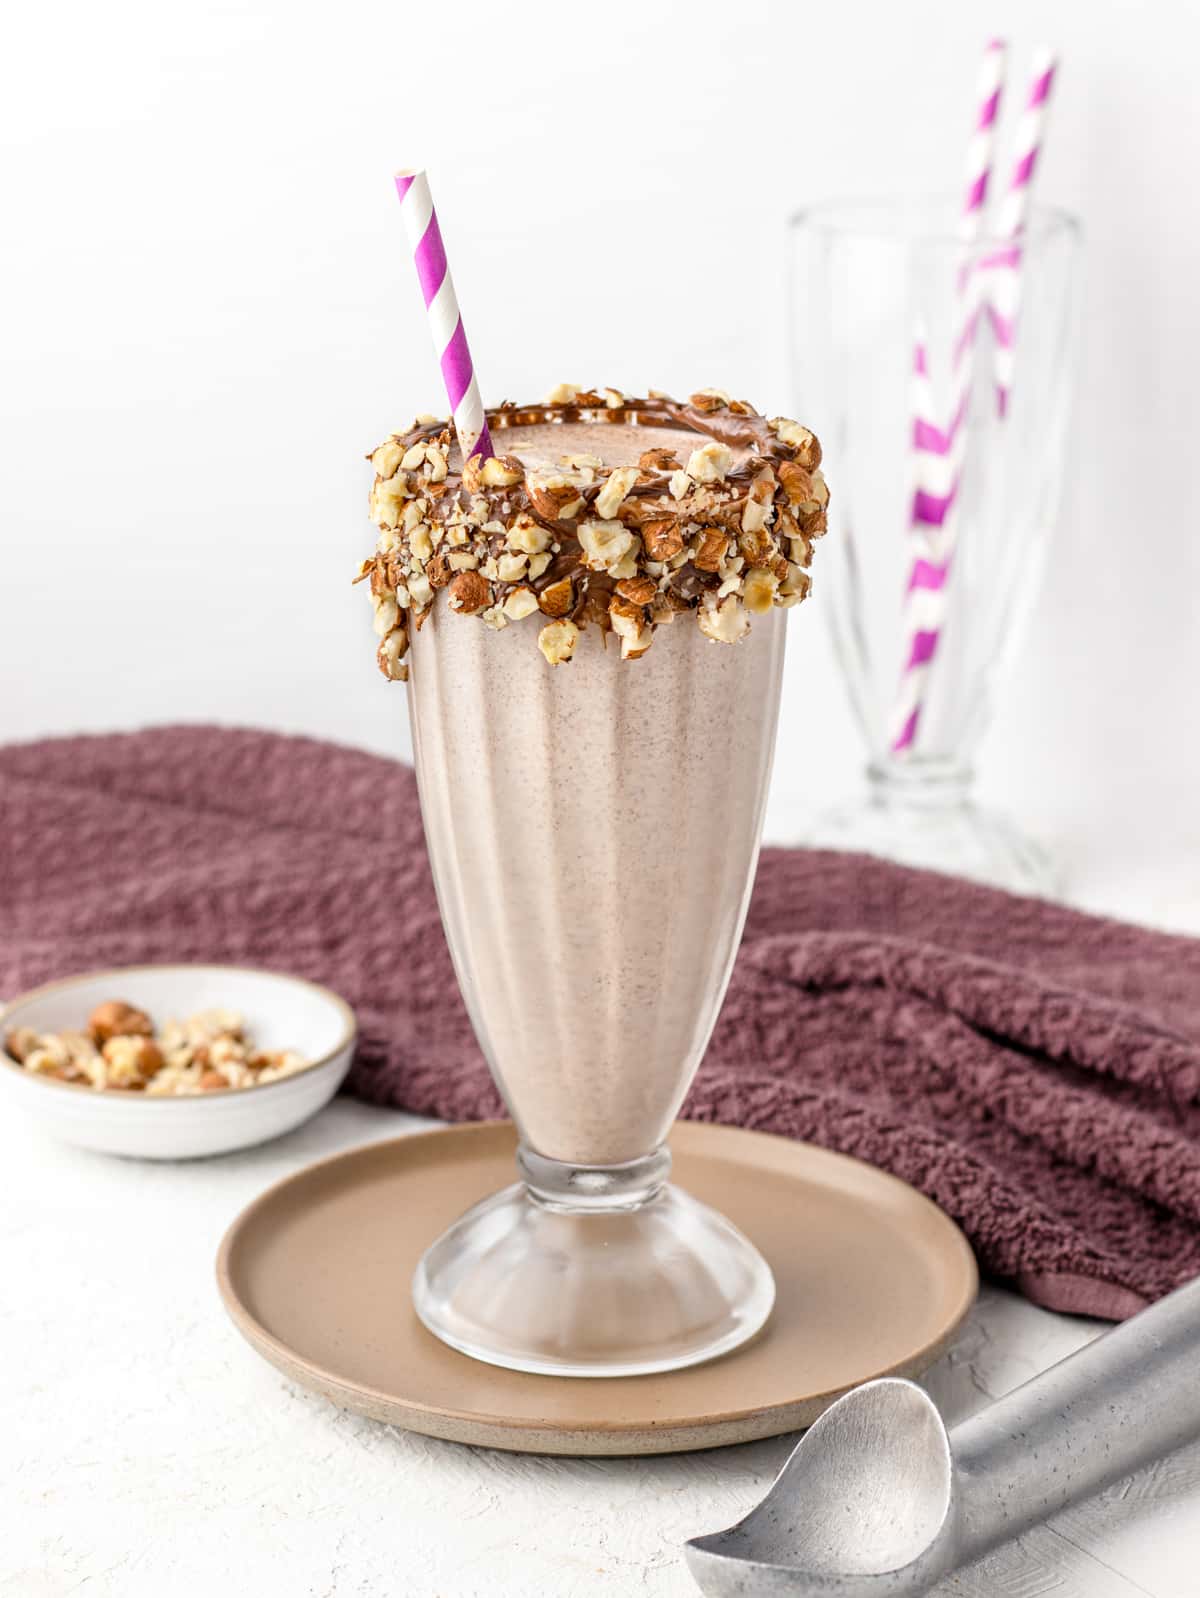 Nutella Milkshake in a milkshake glass with purple straw and glass rimmed with hazelnut spread and chopped hazelnuts.